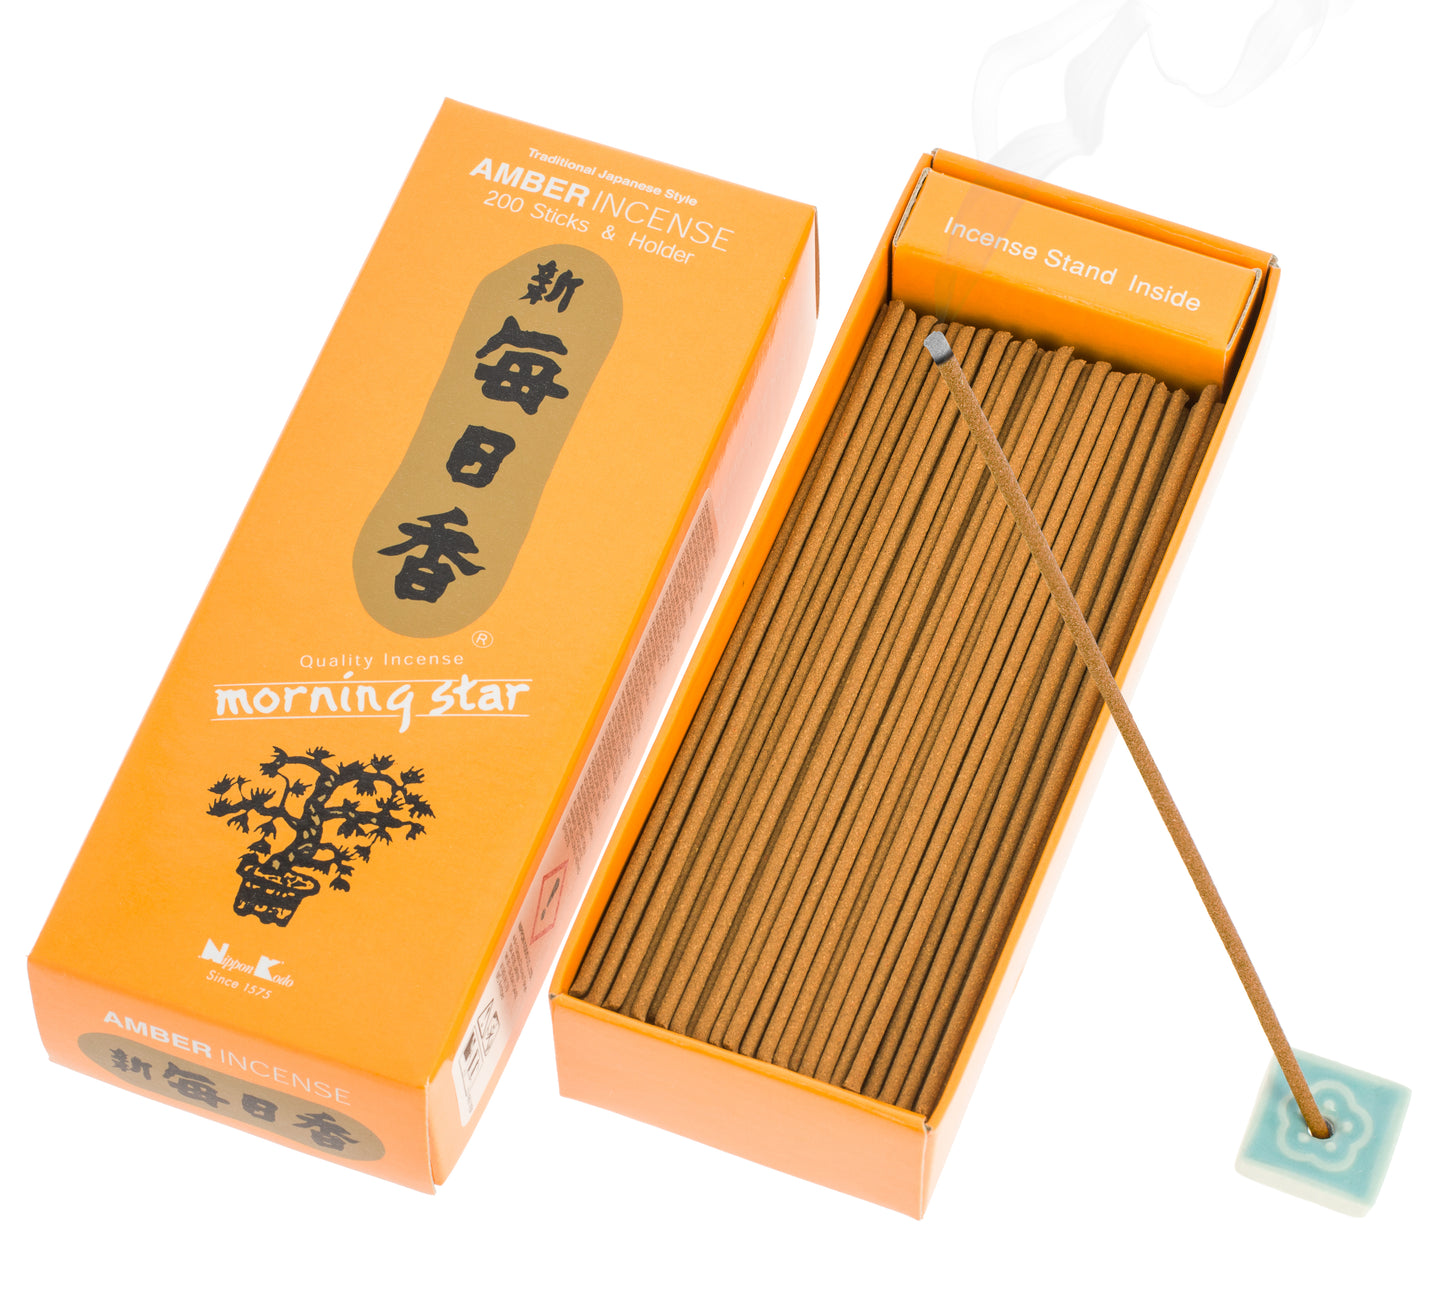 Morning Star Incense - Amber, 200  Sticks